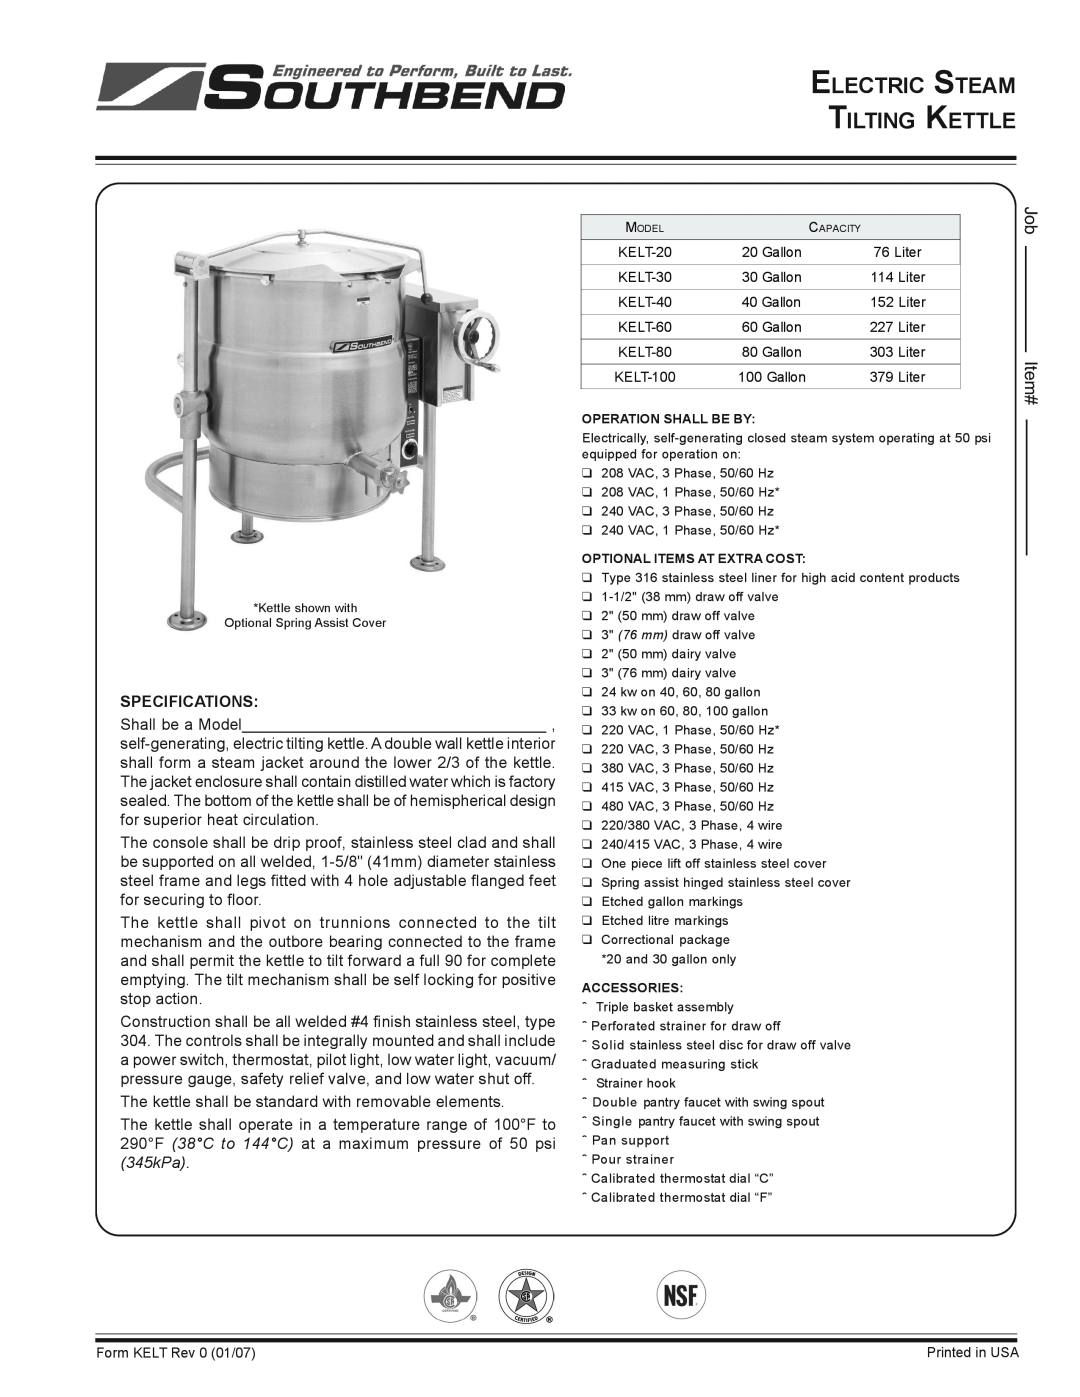 Southbend KELT-20, KELT-30, KELT-100, KELT-60 specifications Specifications, Electric Steam Tilting Kettle, Job Item# 